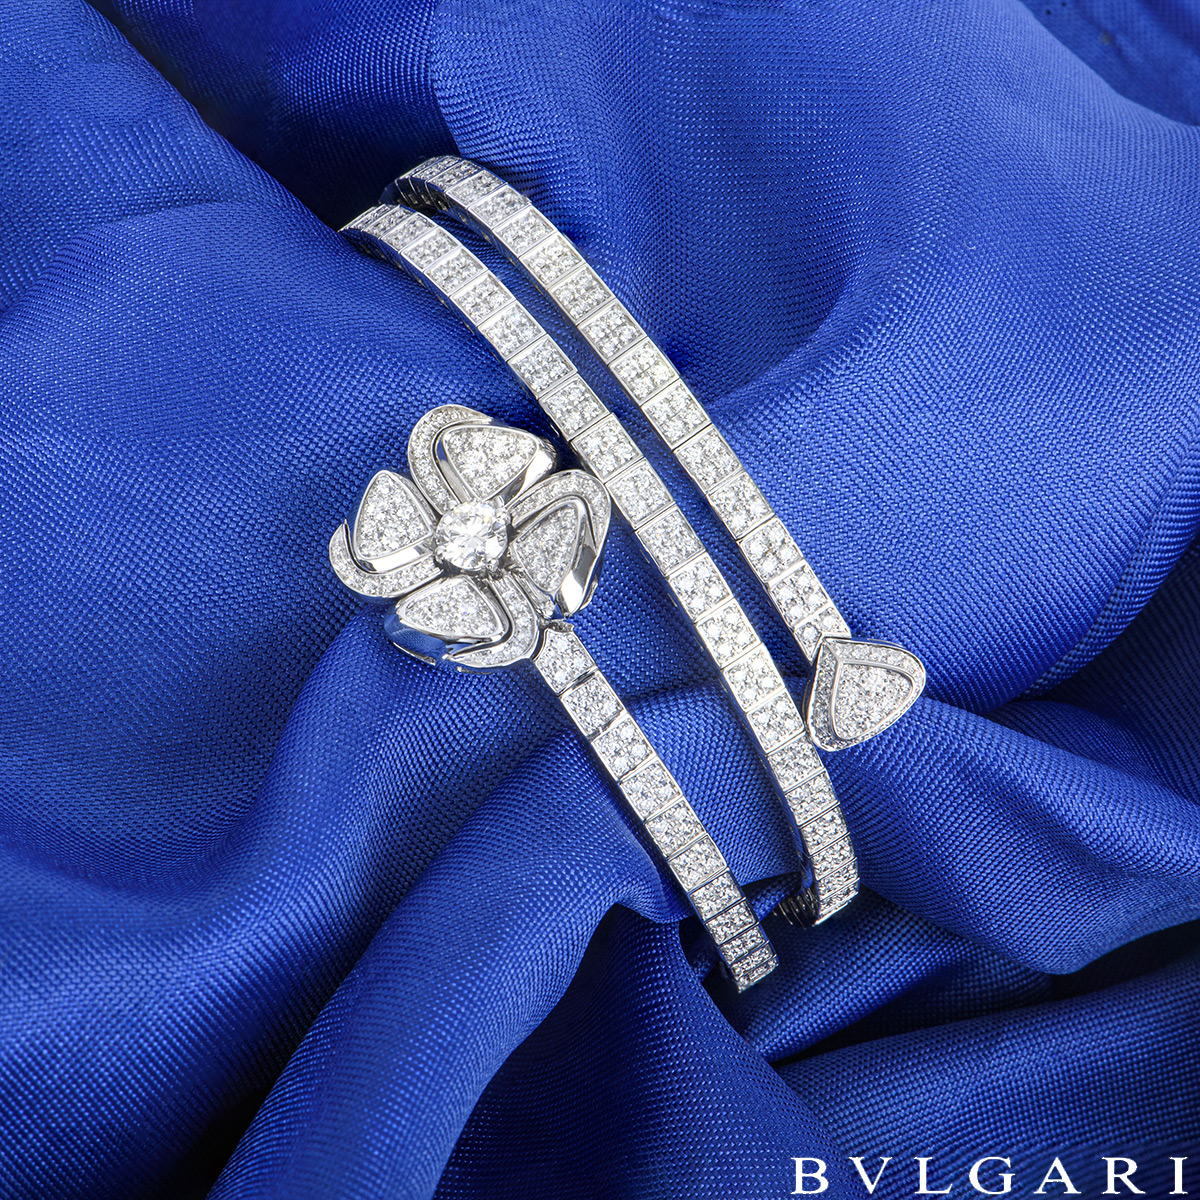 Bvlgari Ladies Fiorever 18k White Gold Bracelet, Size Medium 356275  8034024609071 - Jewelry - Jomashop